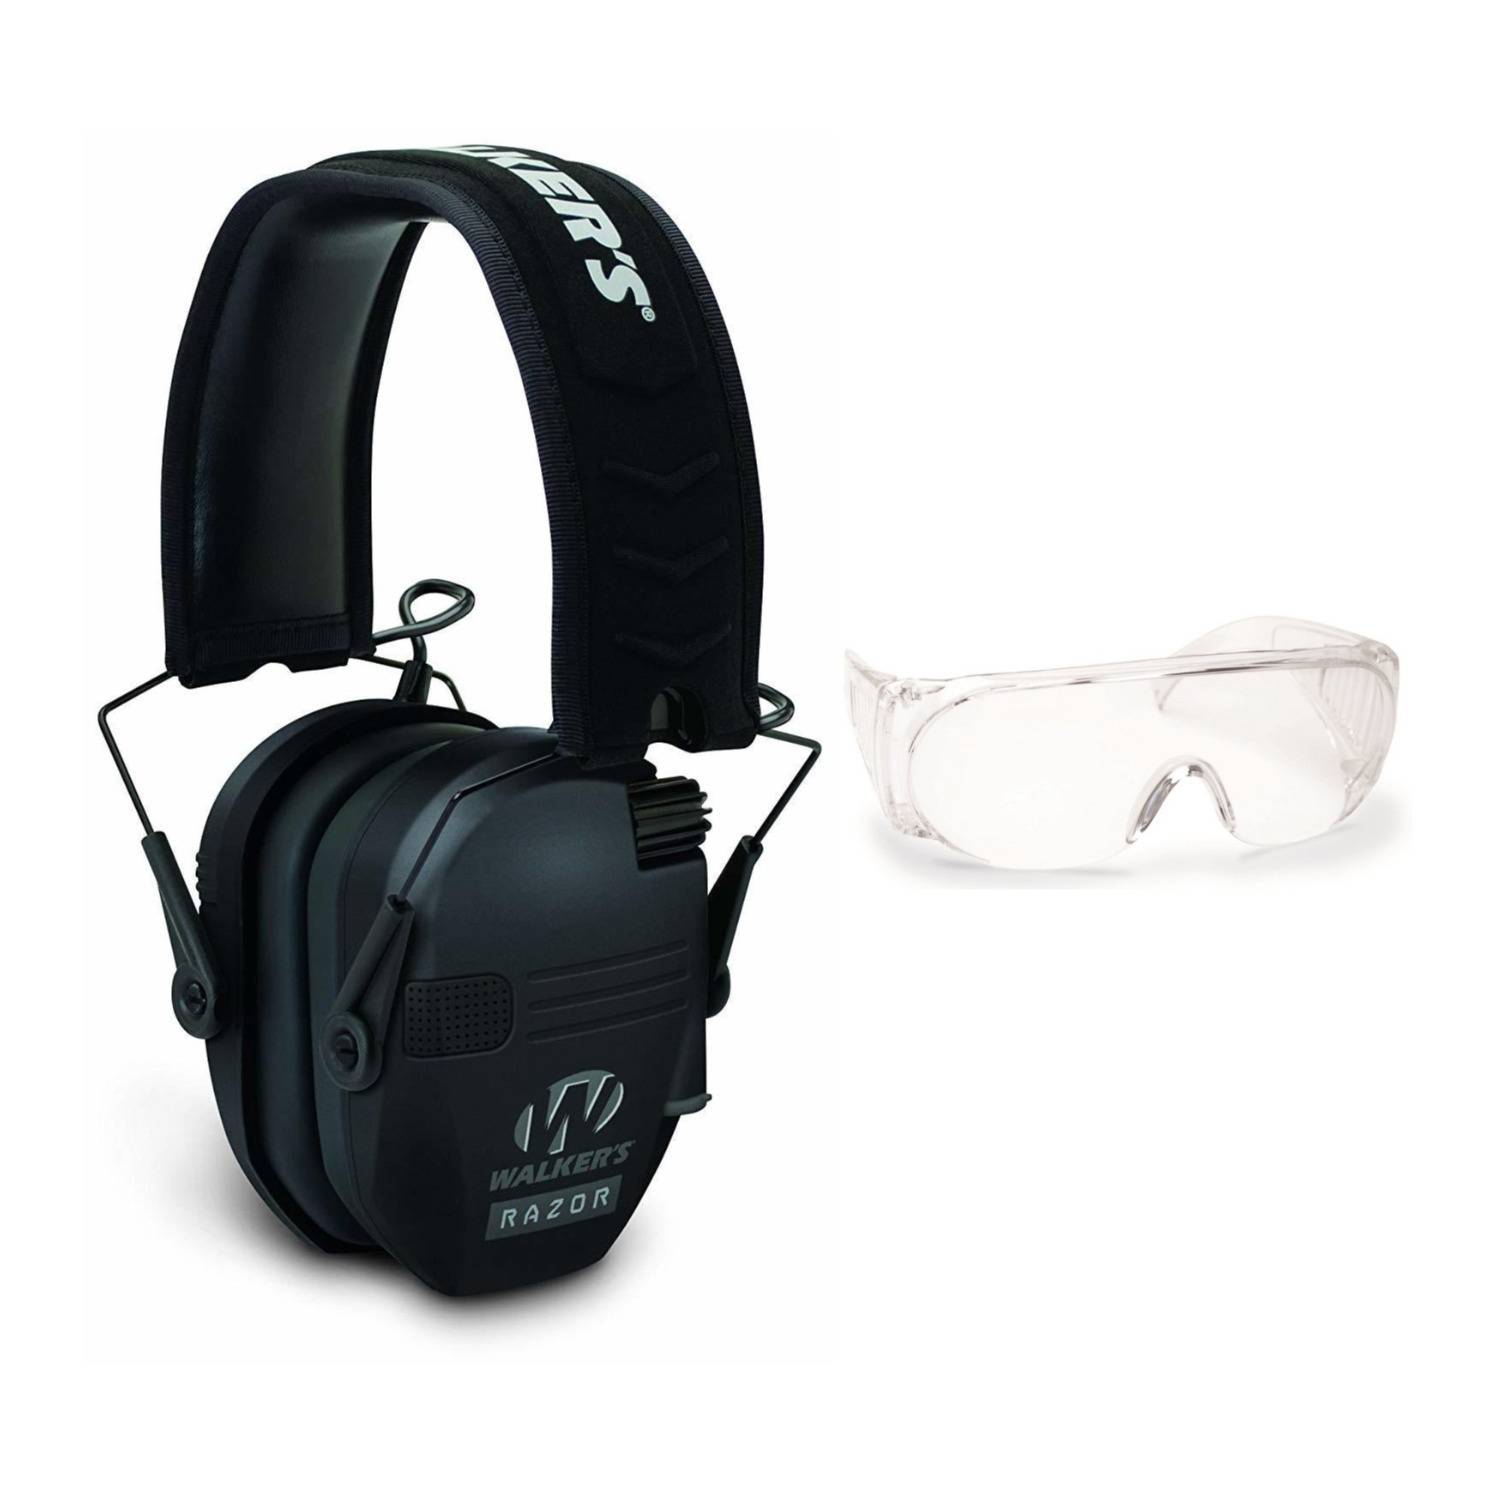 Walker's Razor Slim Shooting Muffs Kit (Black) with OTG Safety Glasses